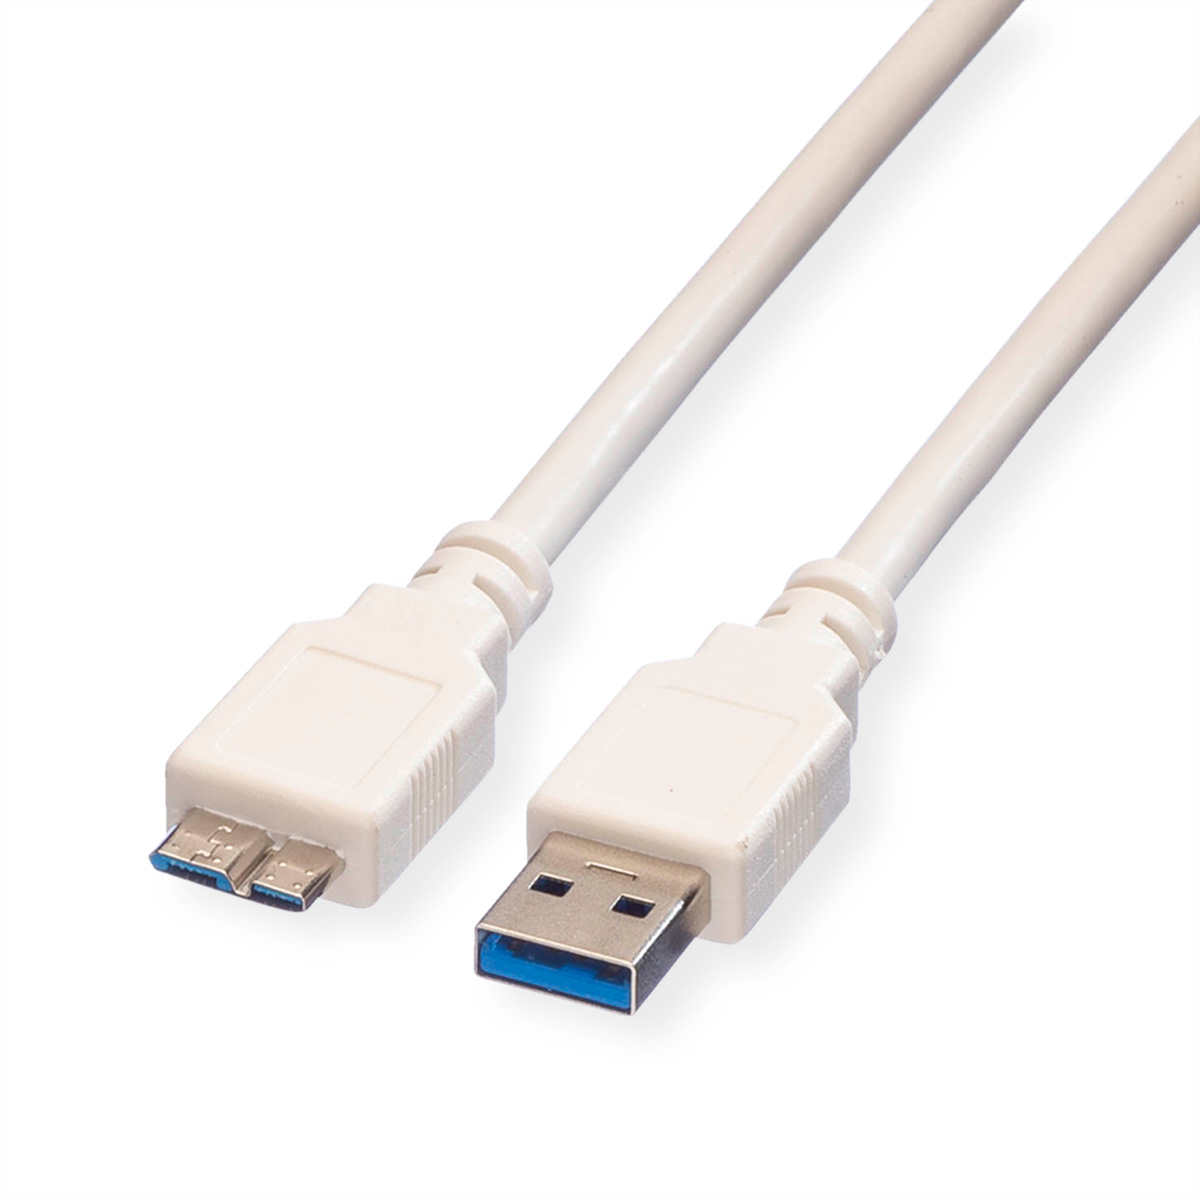 B 3.2 Gen USB 1 Micro A - Kabel, Kabel USB Micro VALUE ST 3.2 ST